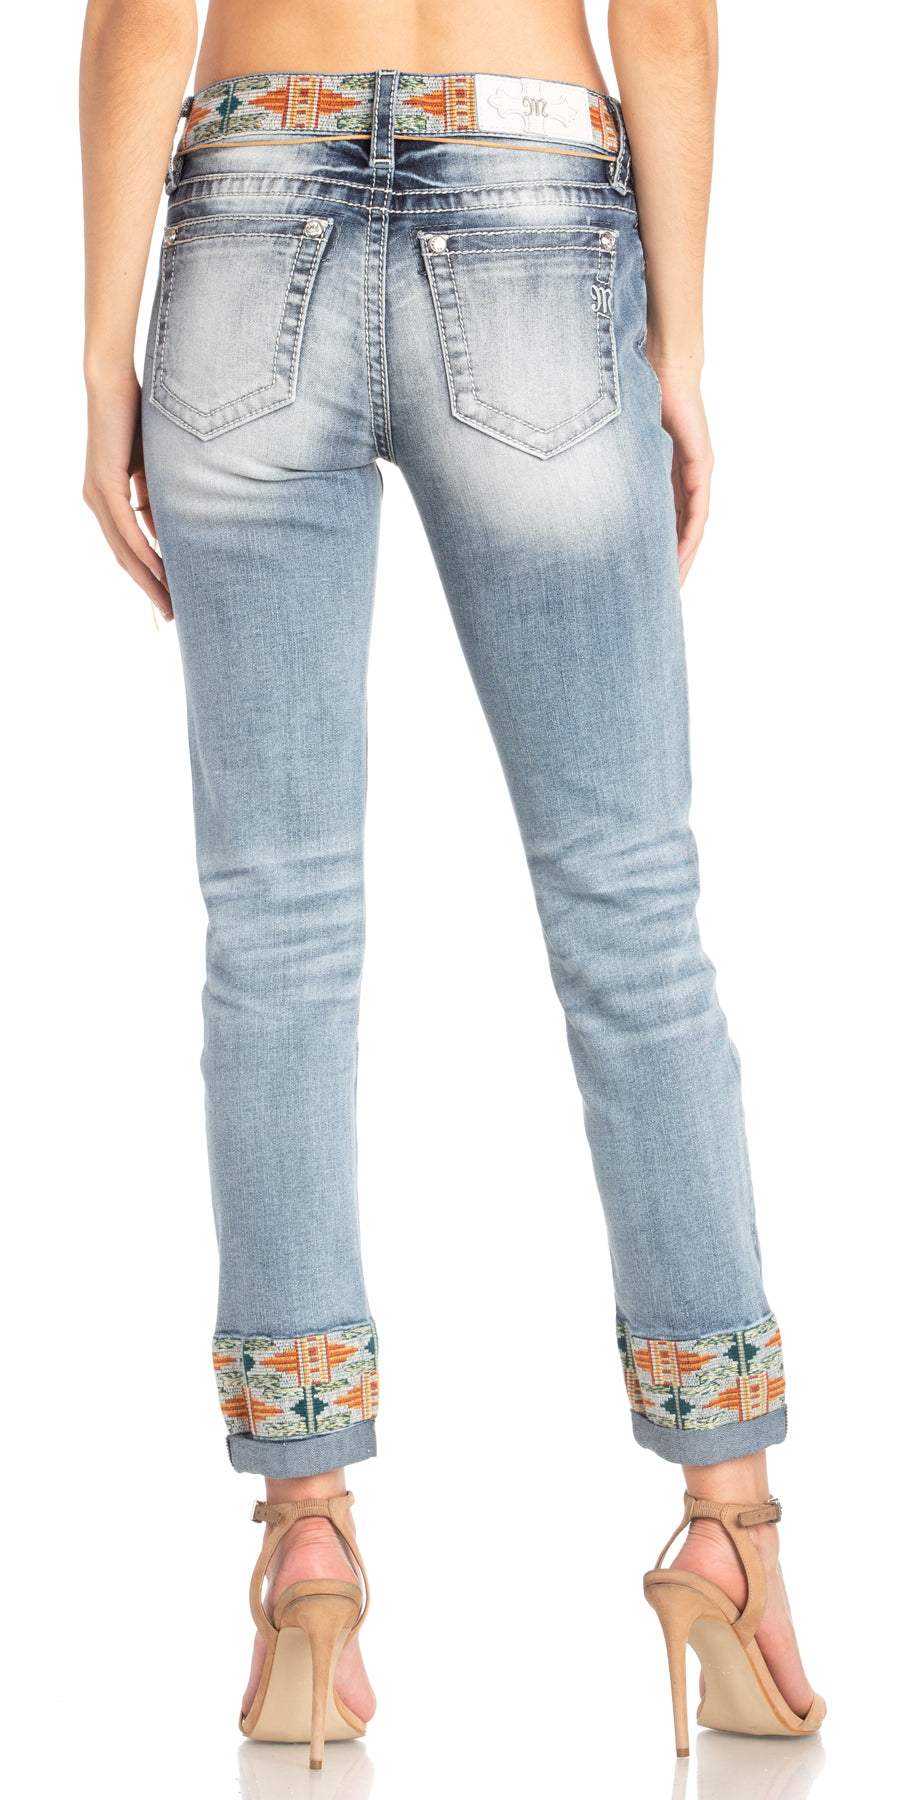 K1033 Jeans